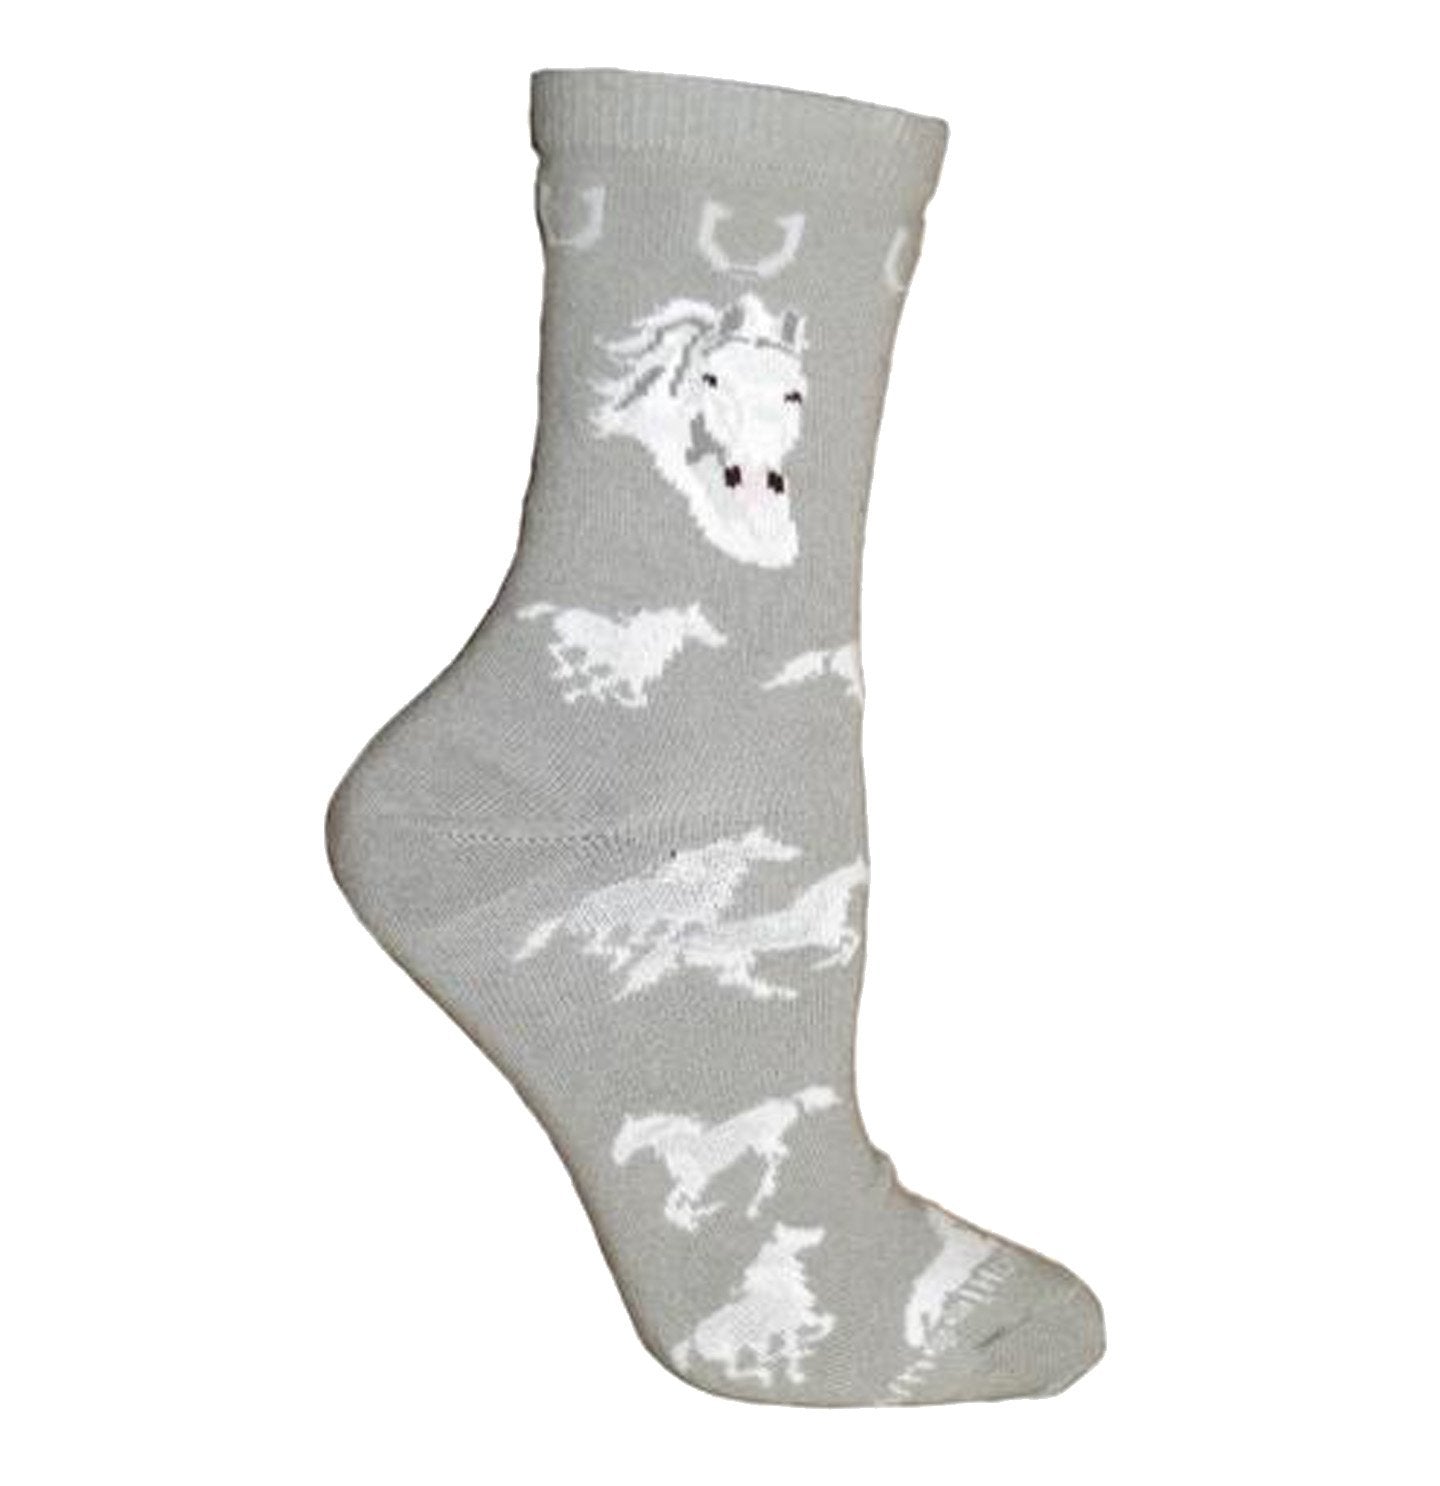 Animal Pride - White Horse on Grey - Adult Cotton Crew Socks